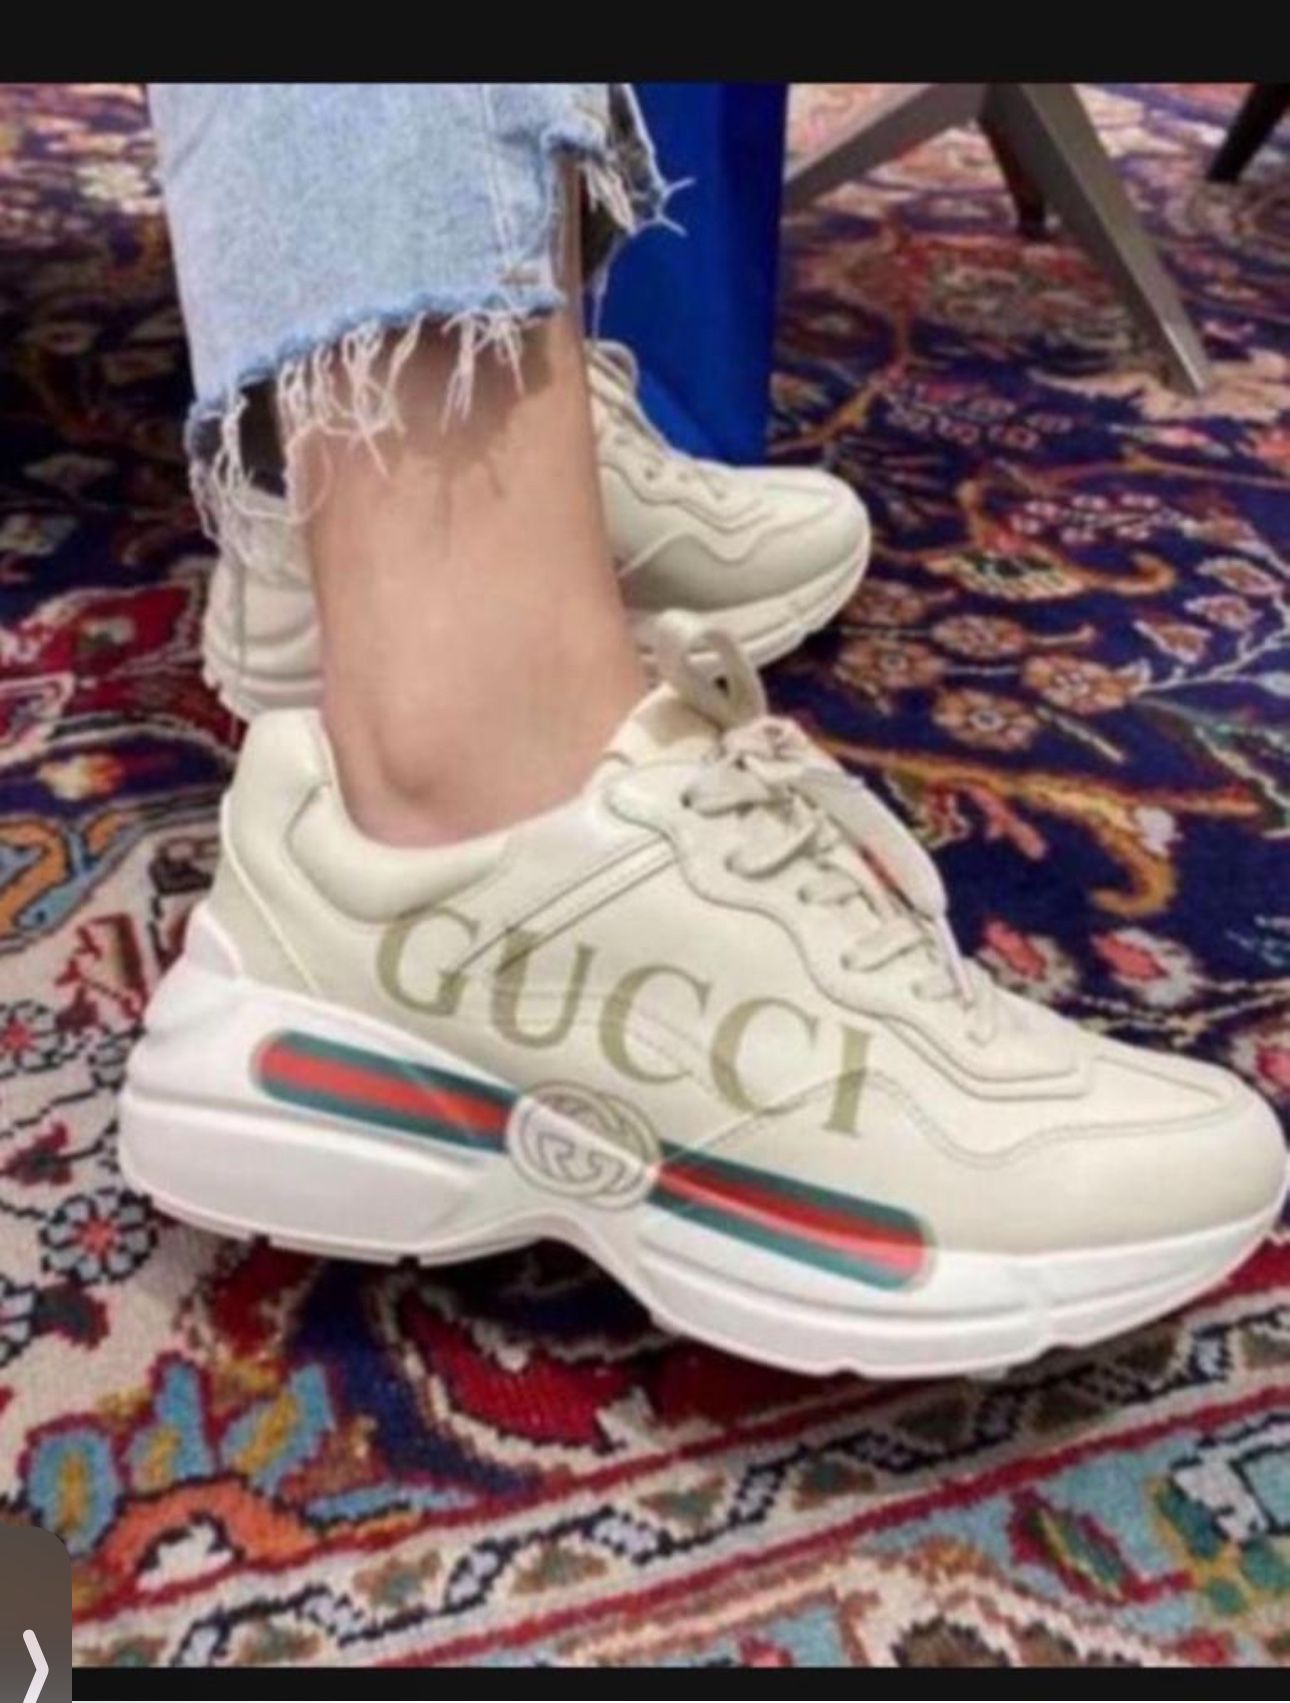 Gucci Shoes 